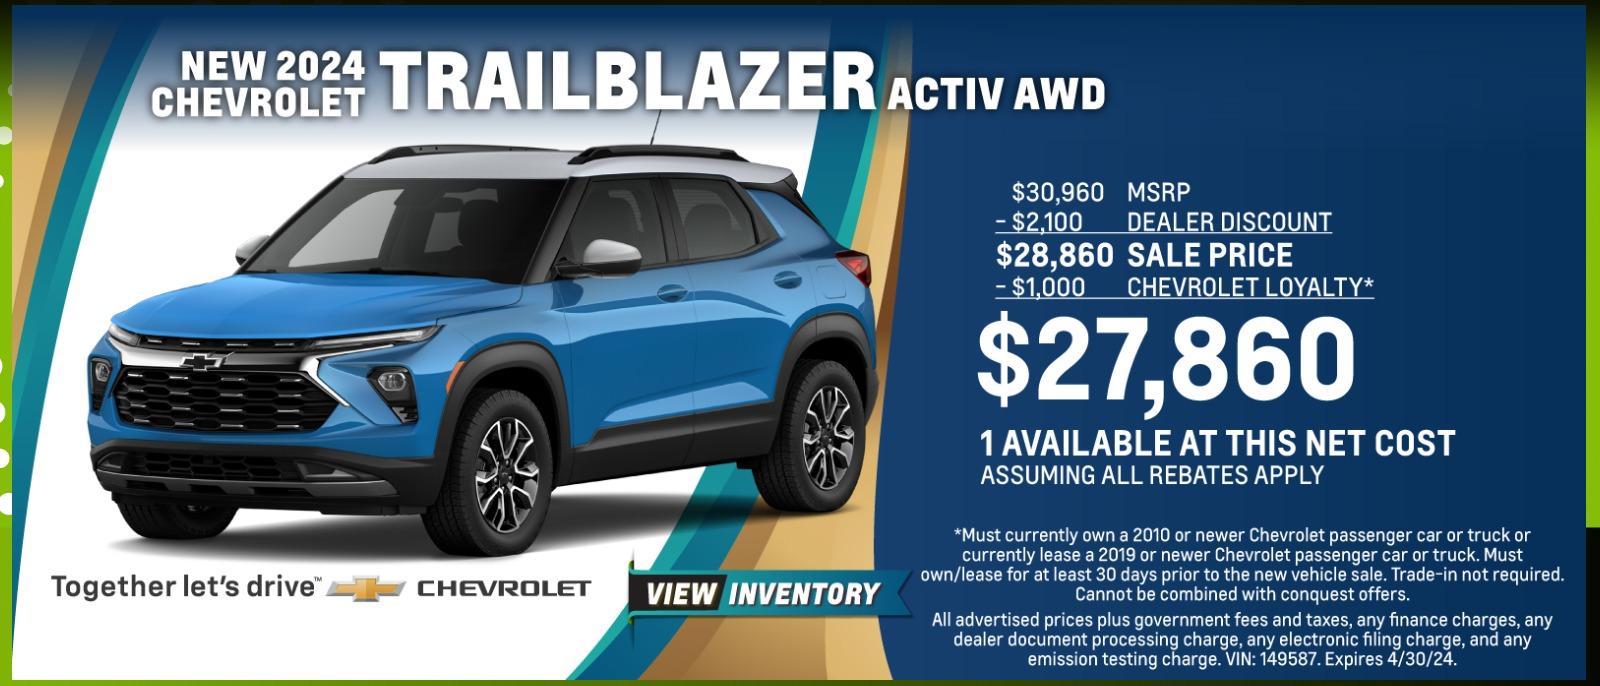 Purchase a New 2024 Chevy Trailblazer